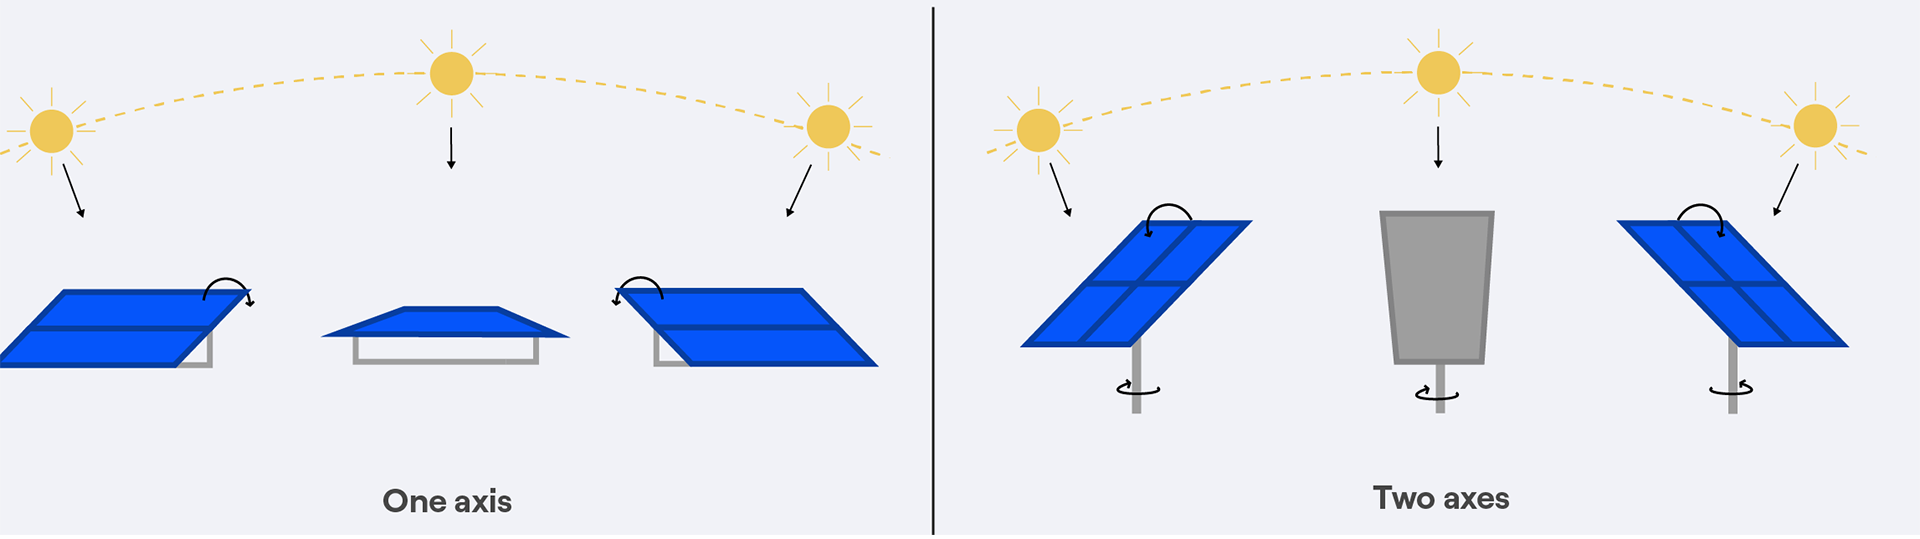 Solar Panels Tracking the Sun